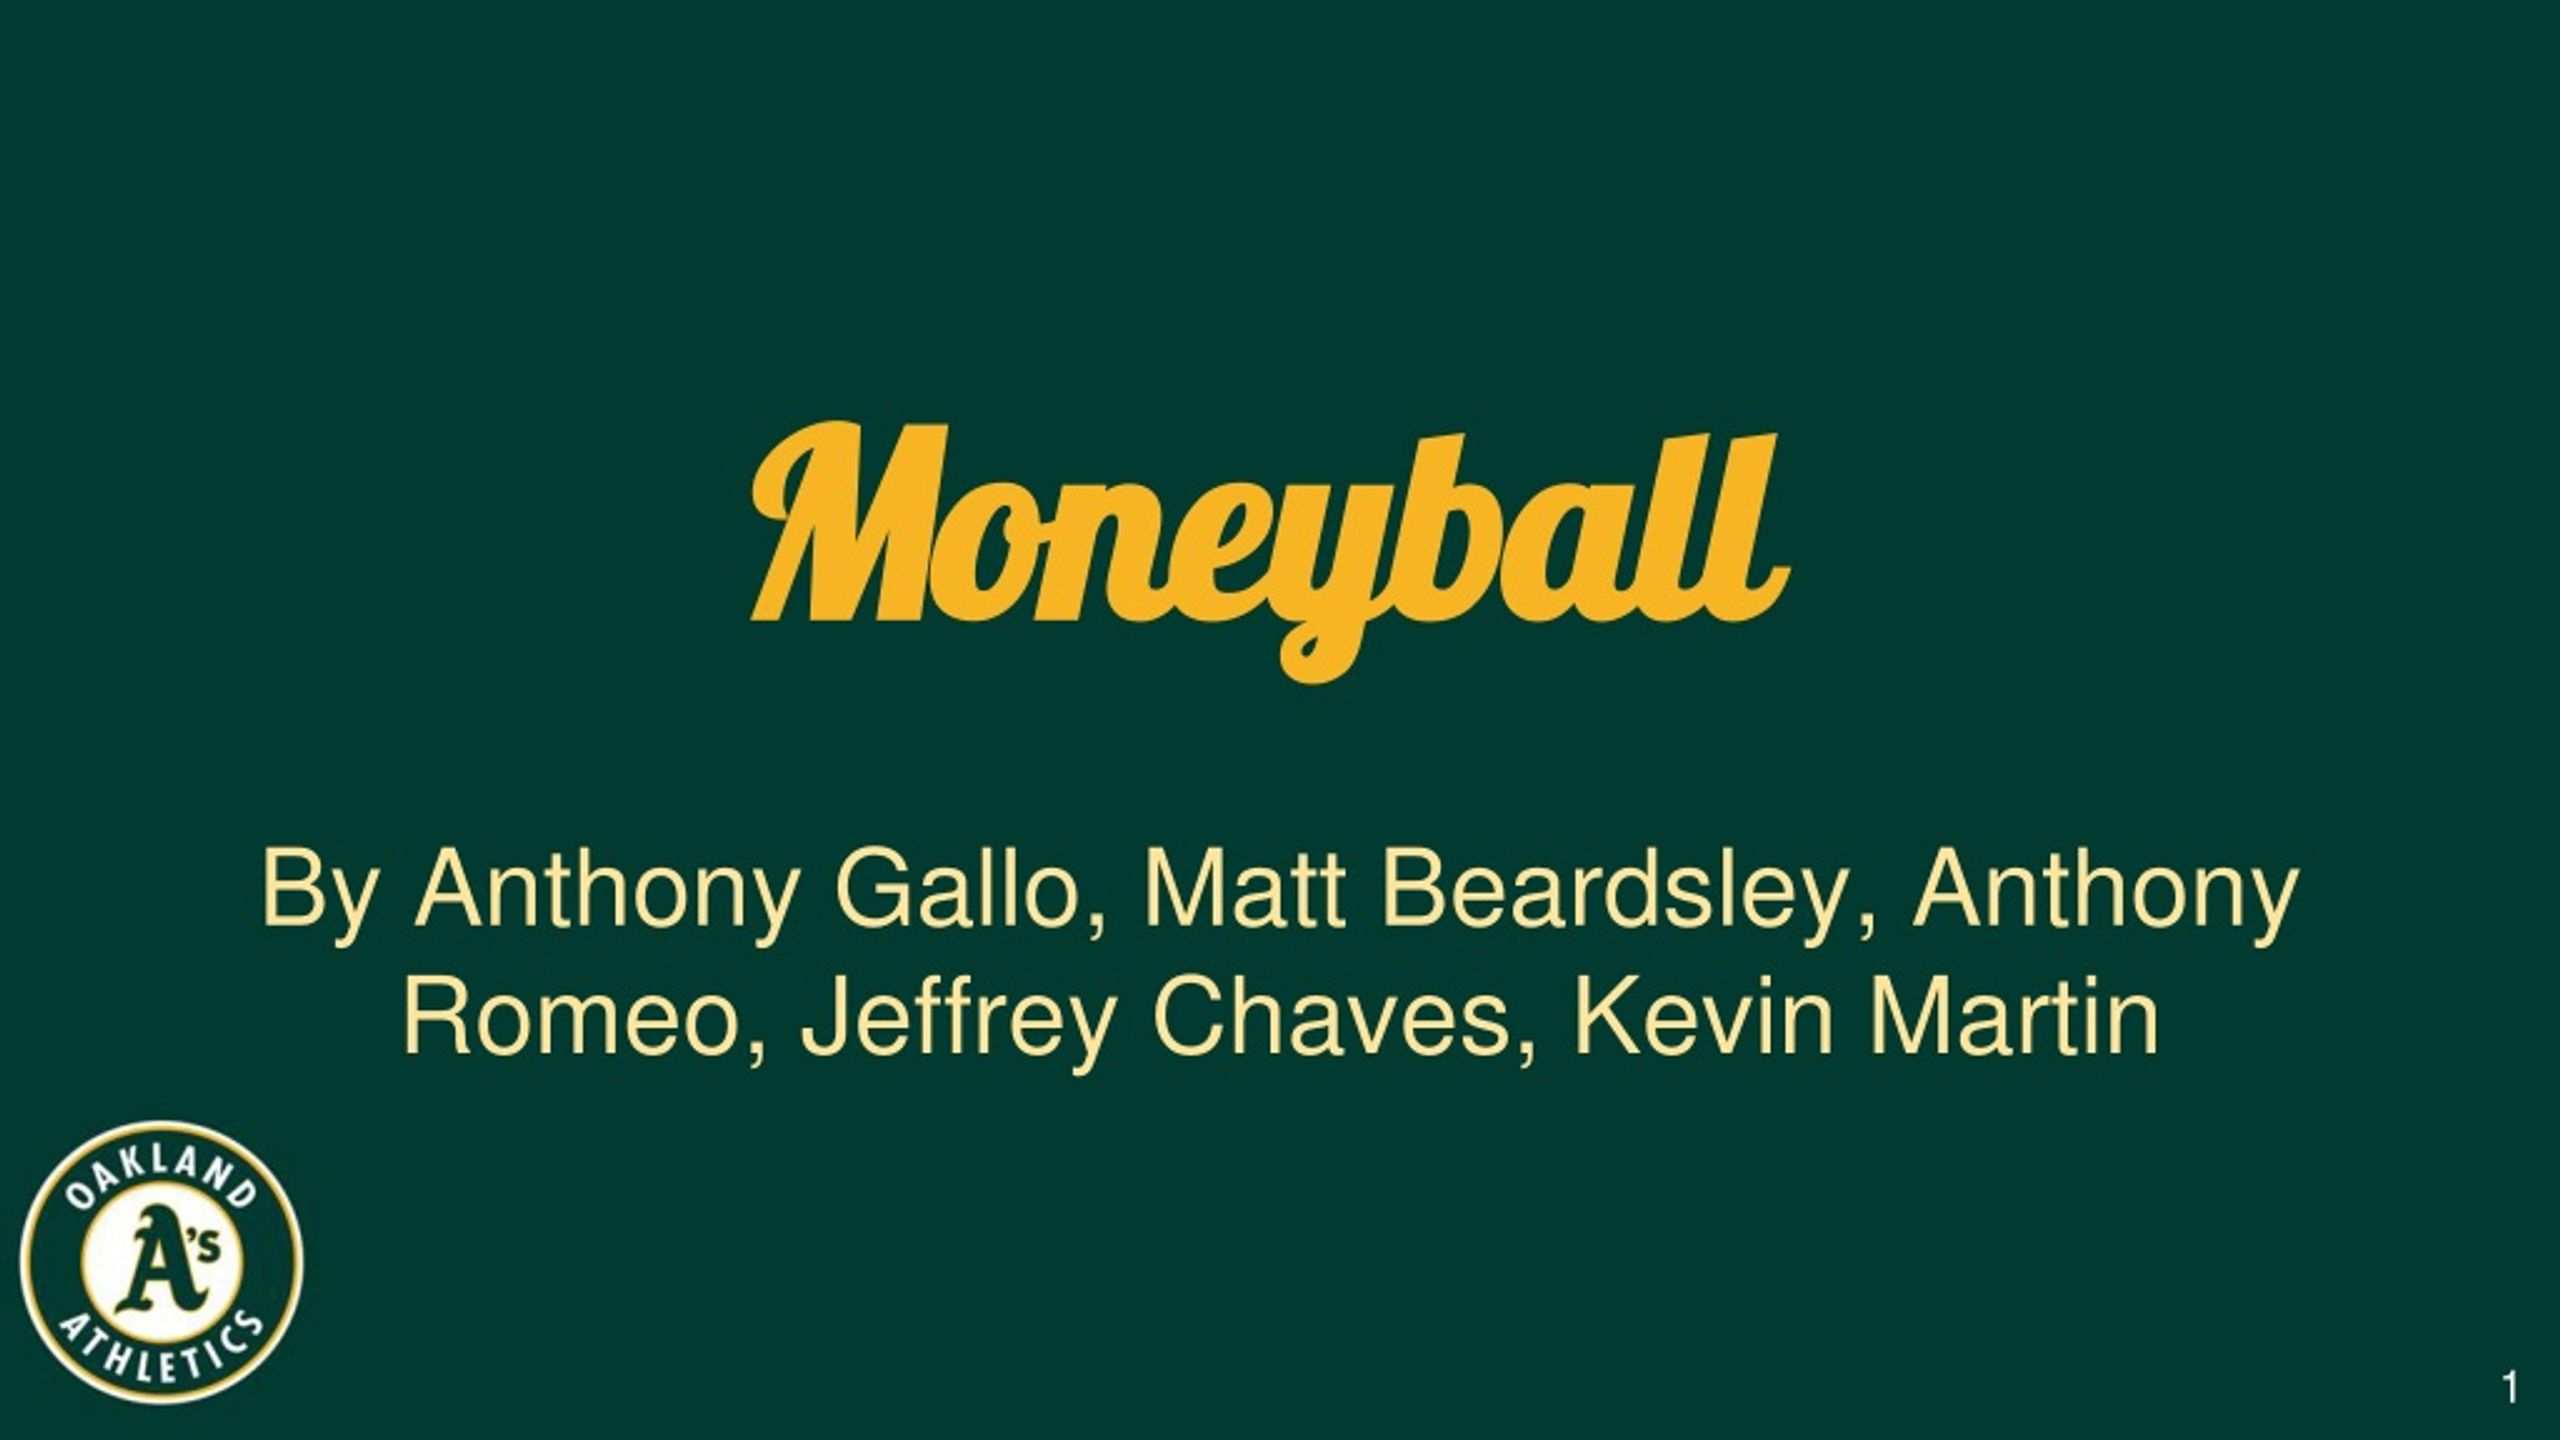 Moneyball PDF Free Download